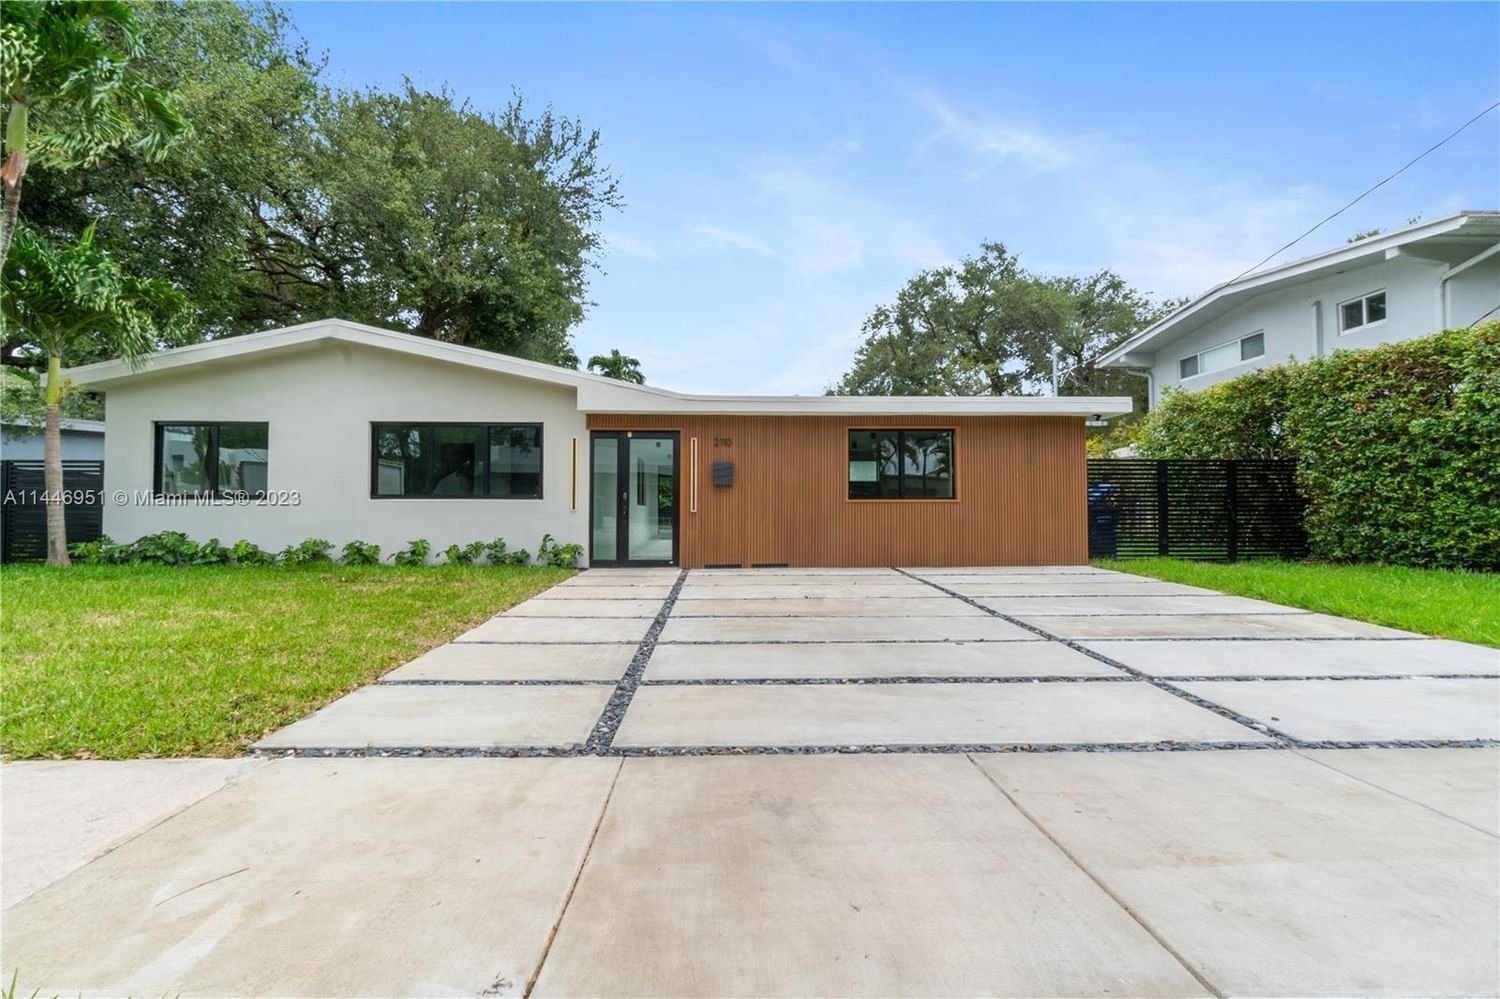 Real estate property located at 2110 191st Dr, Miami-Dade County, North Miami Beach, FL